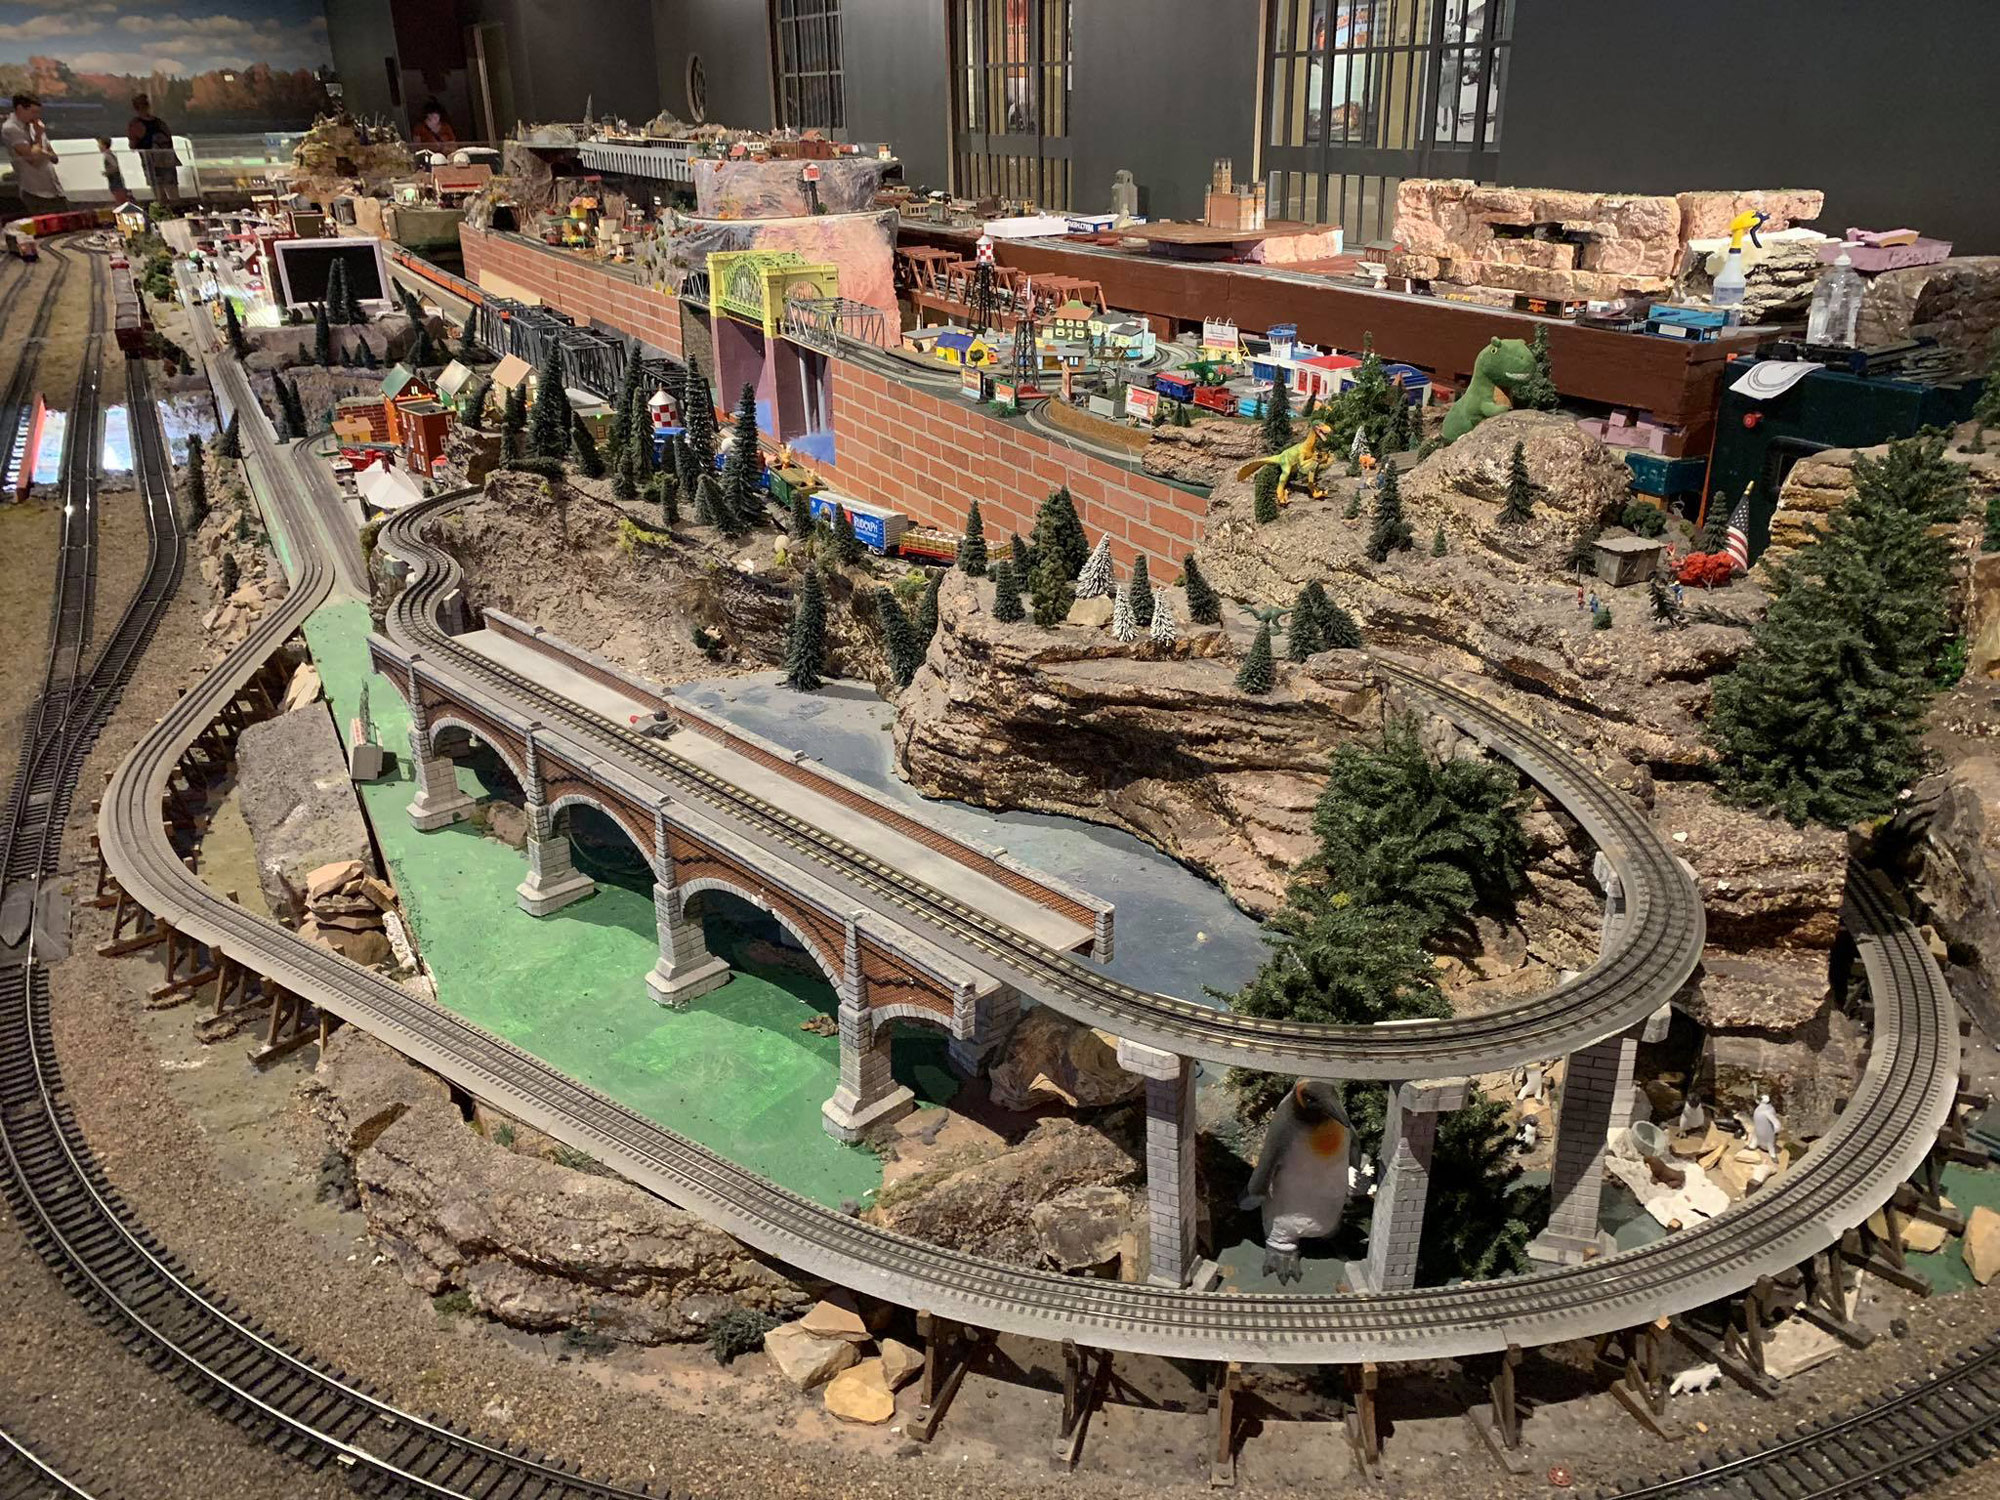 model train platforms designs